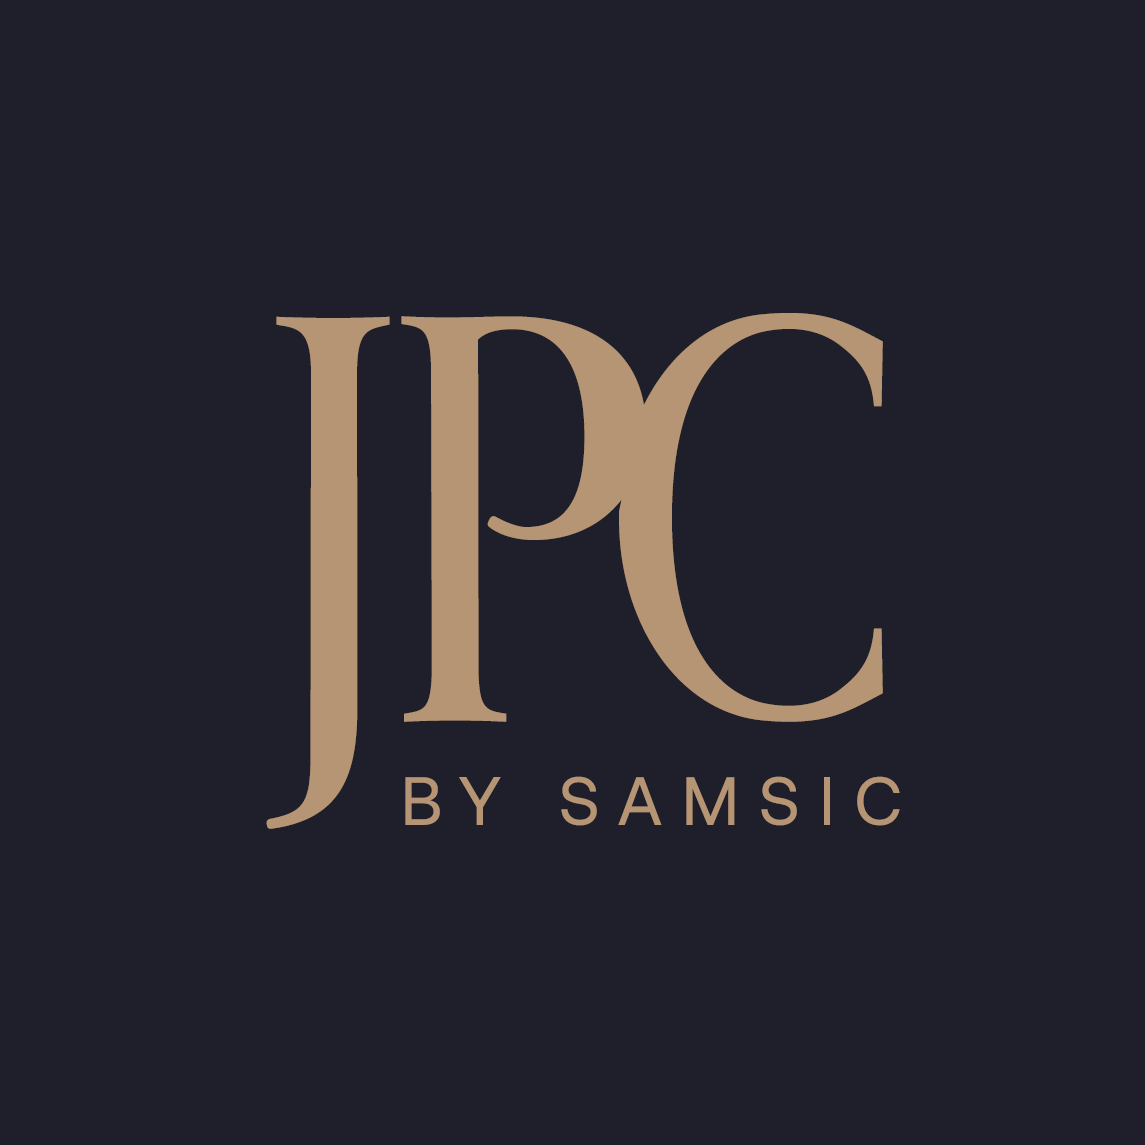 JPC by Samsic Logo